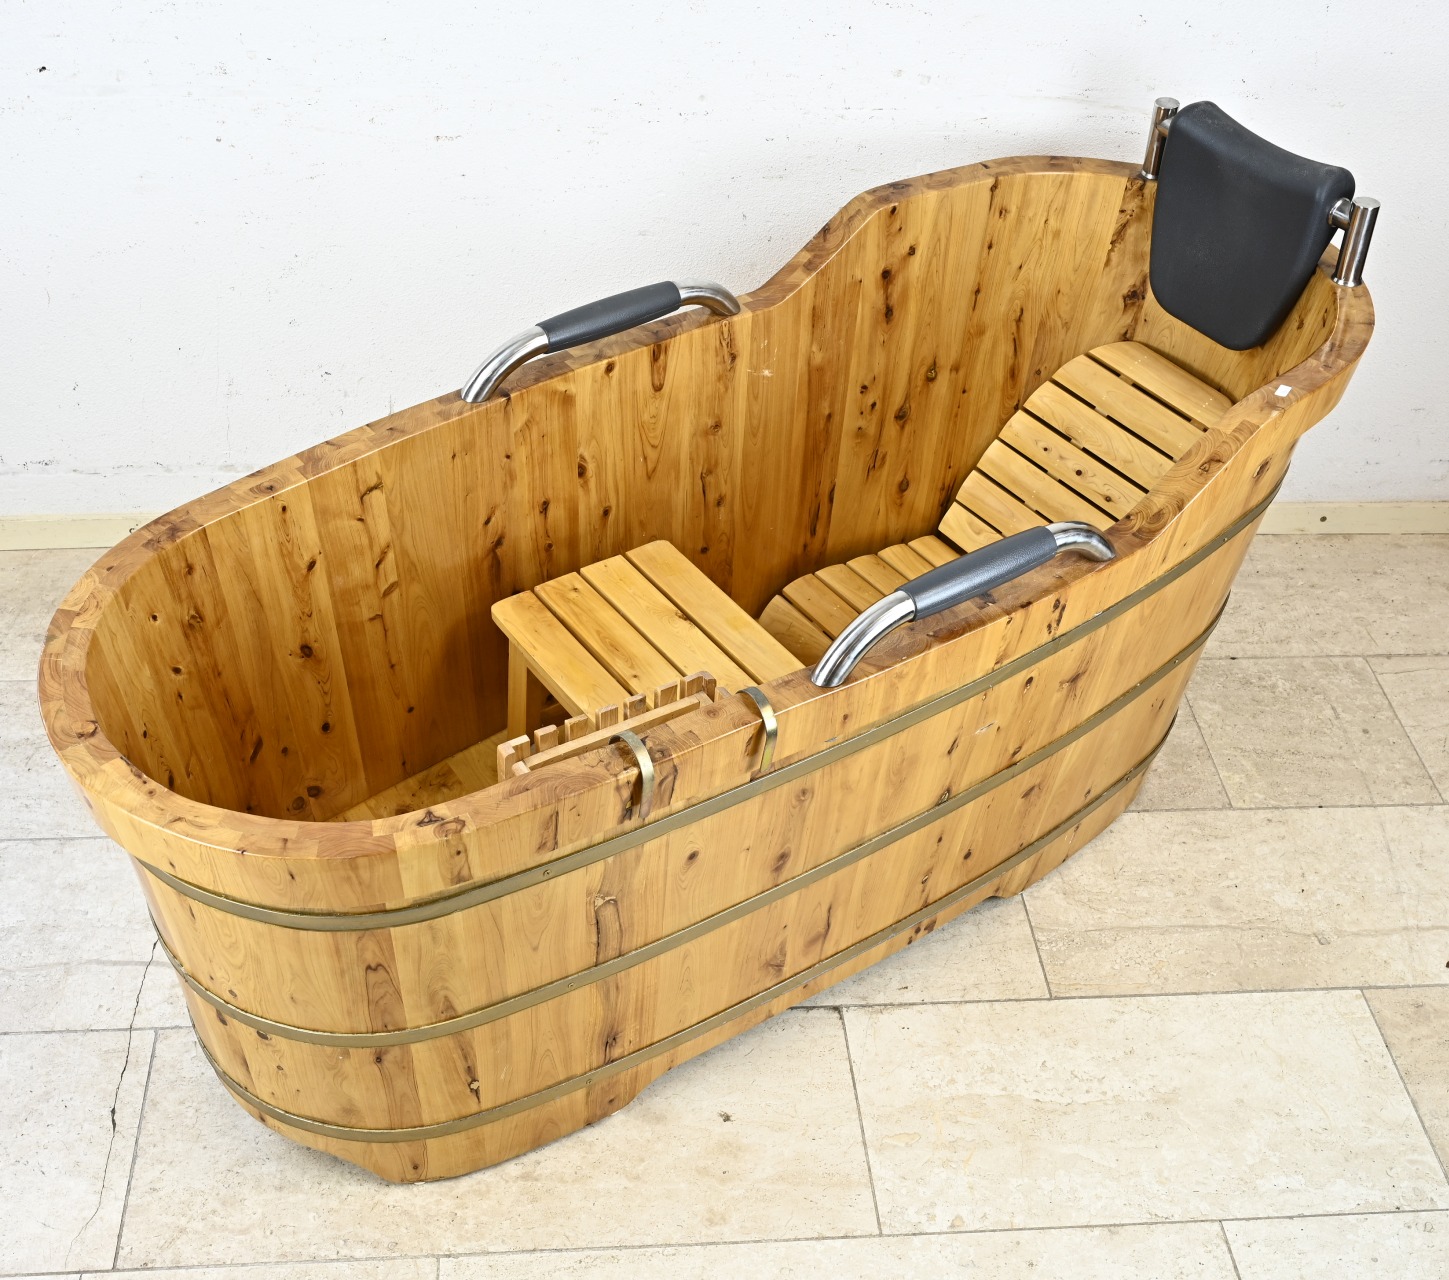 Wooden spa bathtub - Image 2 of 3